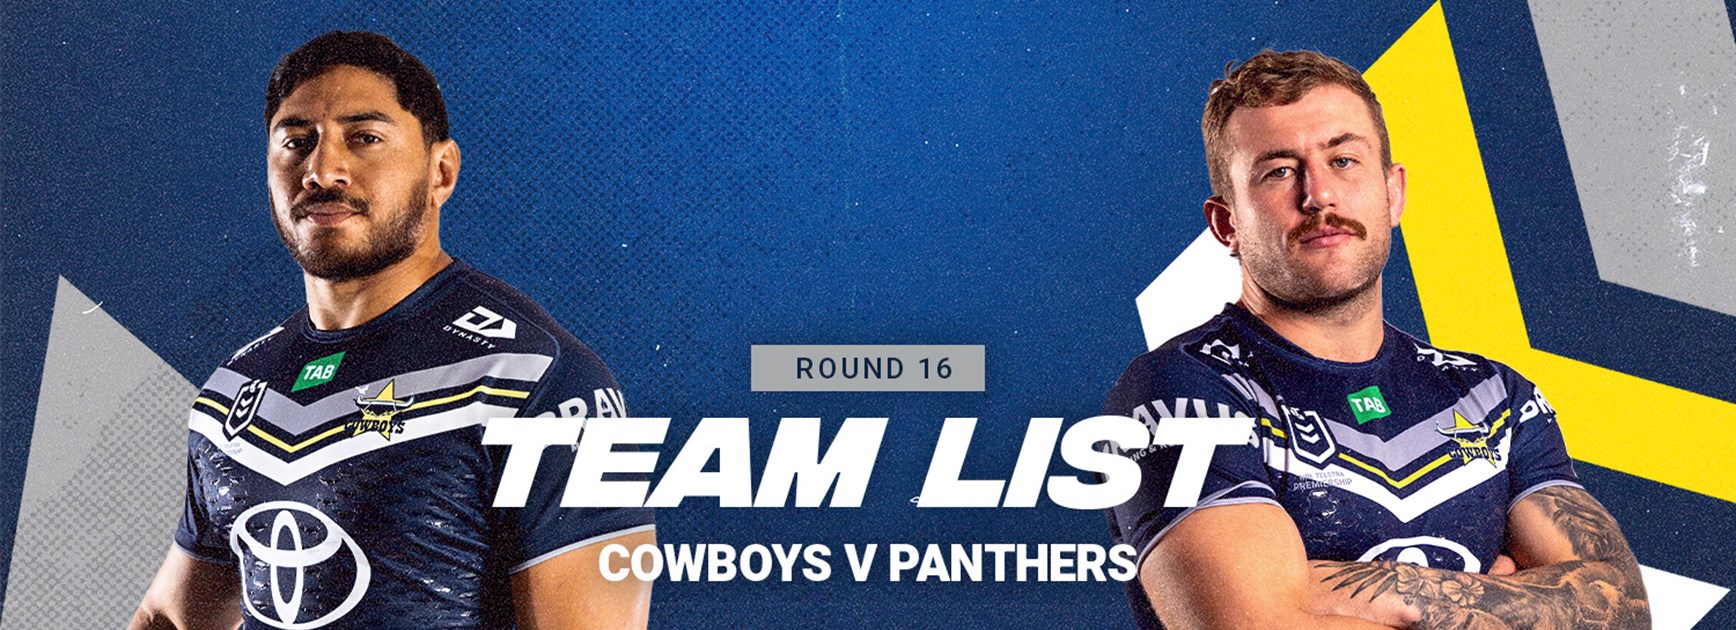 Cowboys team list: Round 16 v Panthers